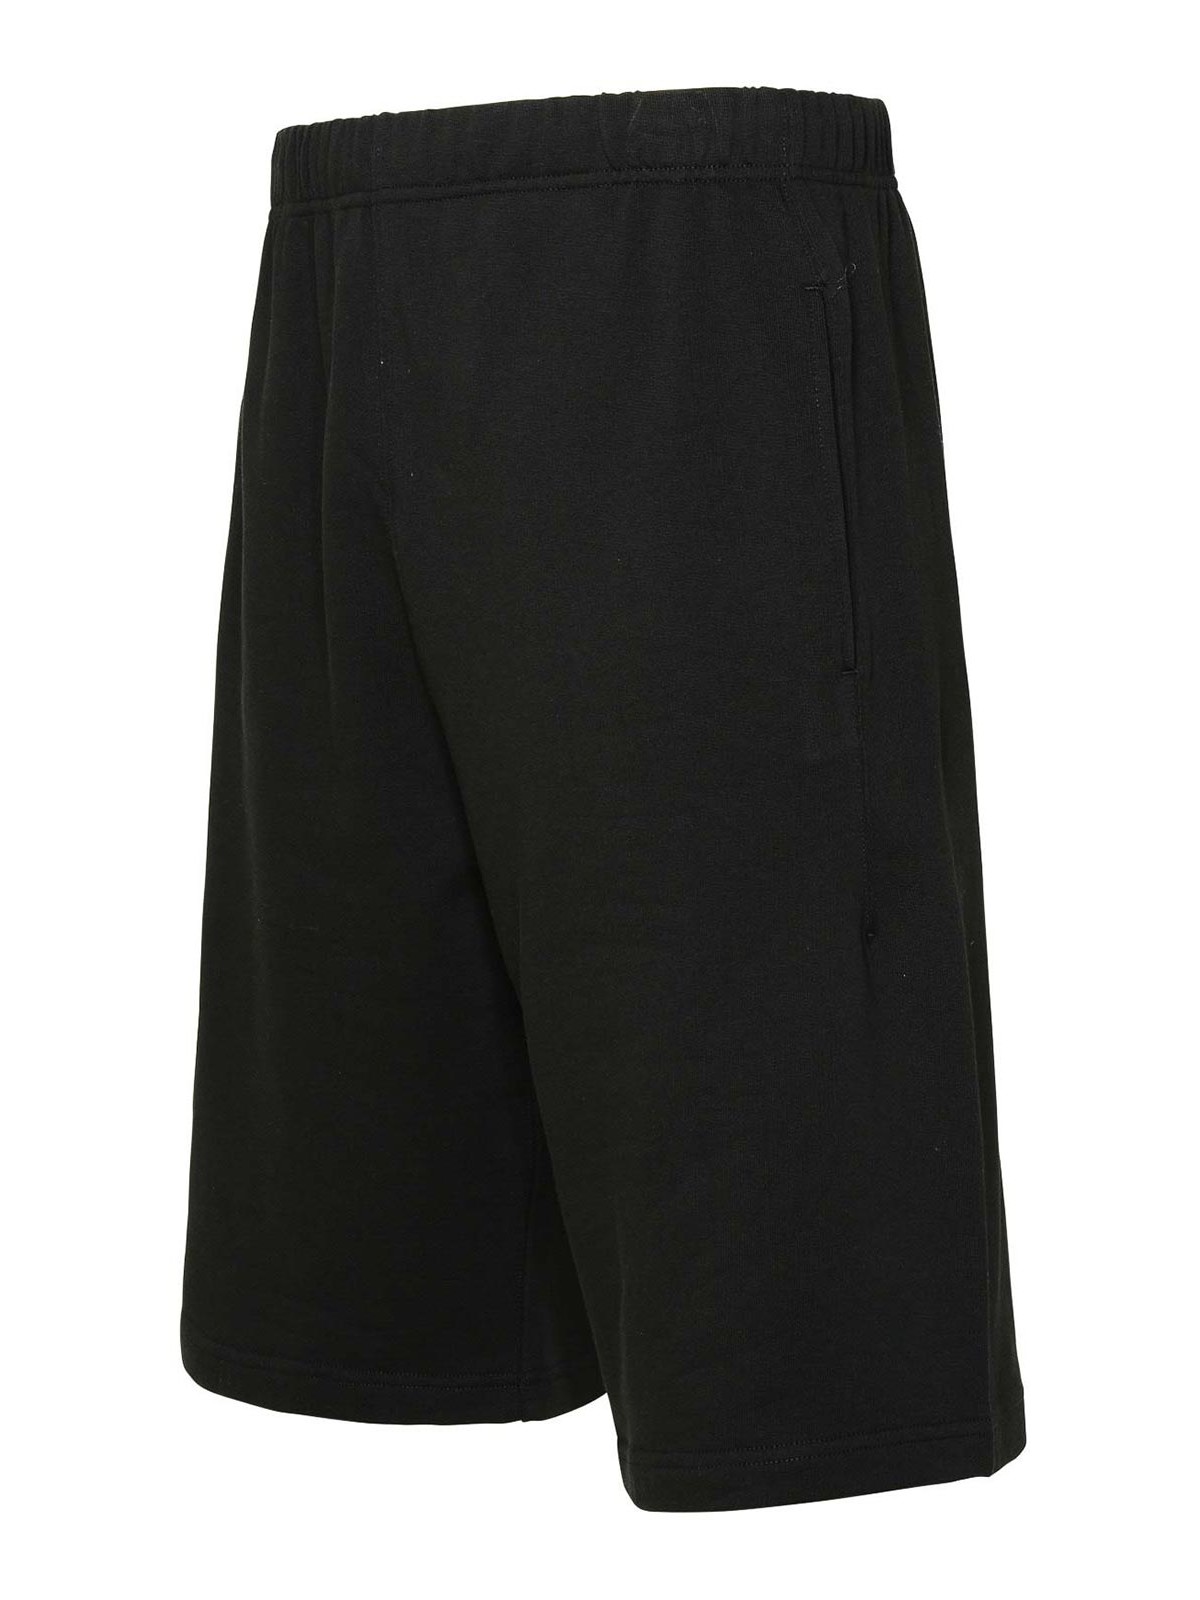 Burberry Black Raphael Shorts